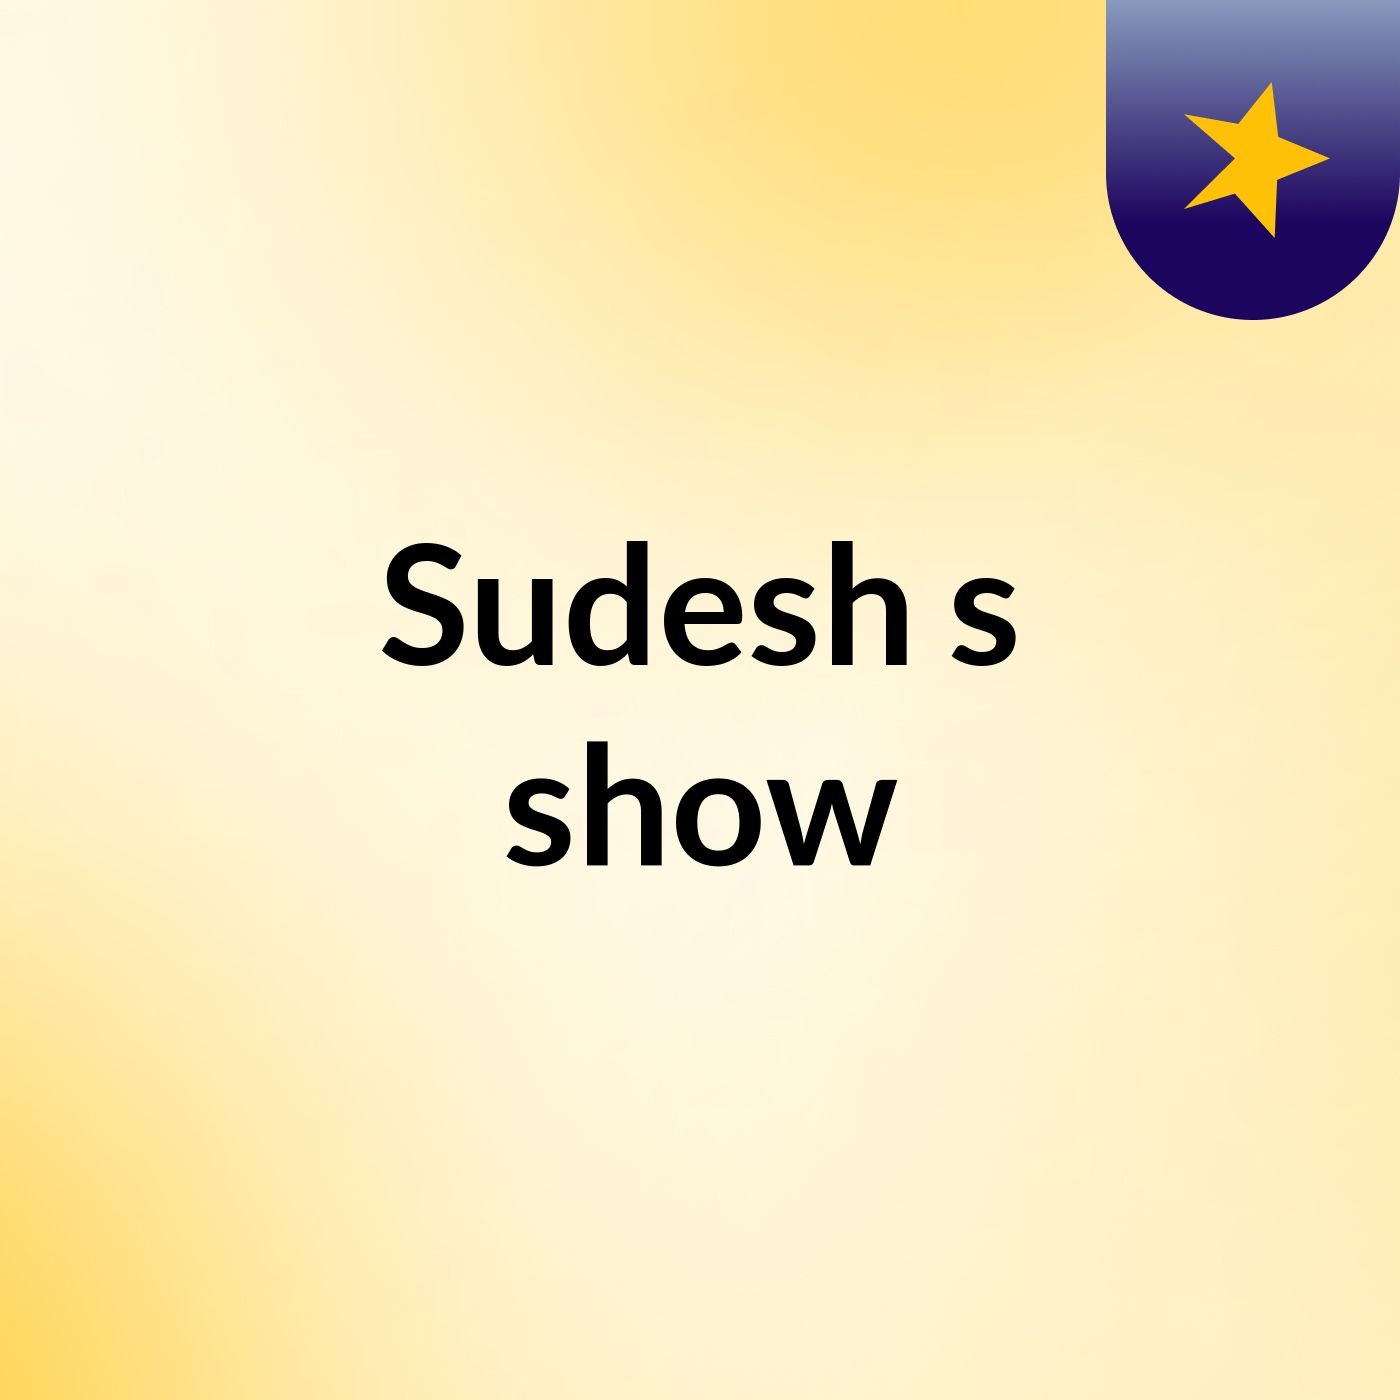 Sudesh's show